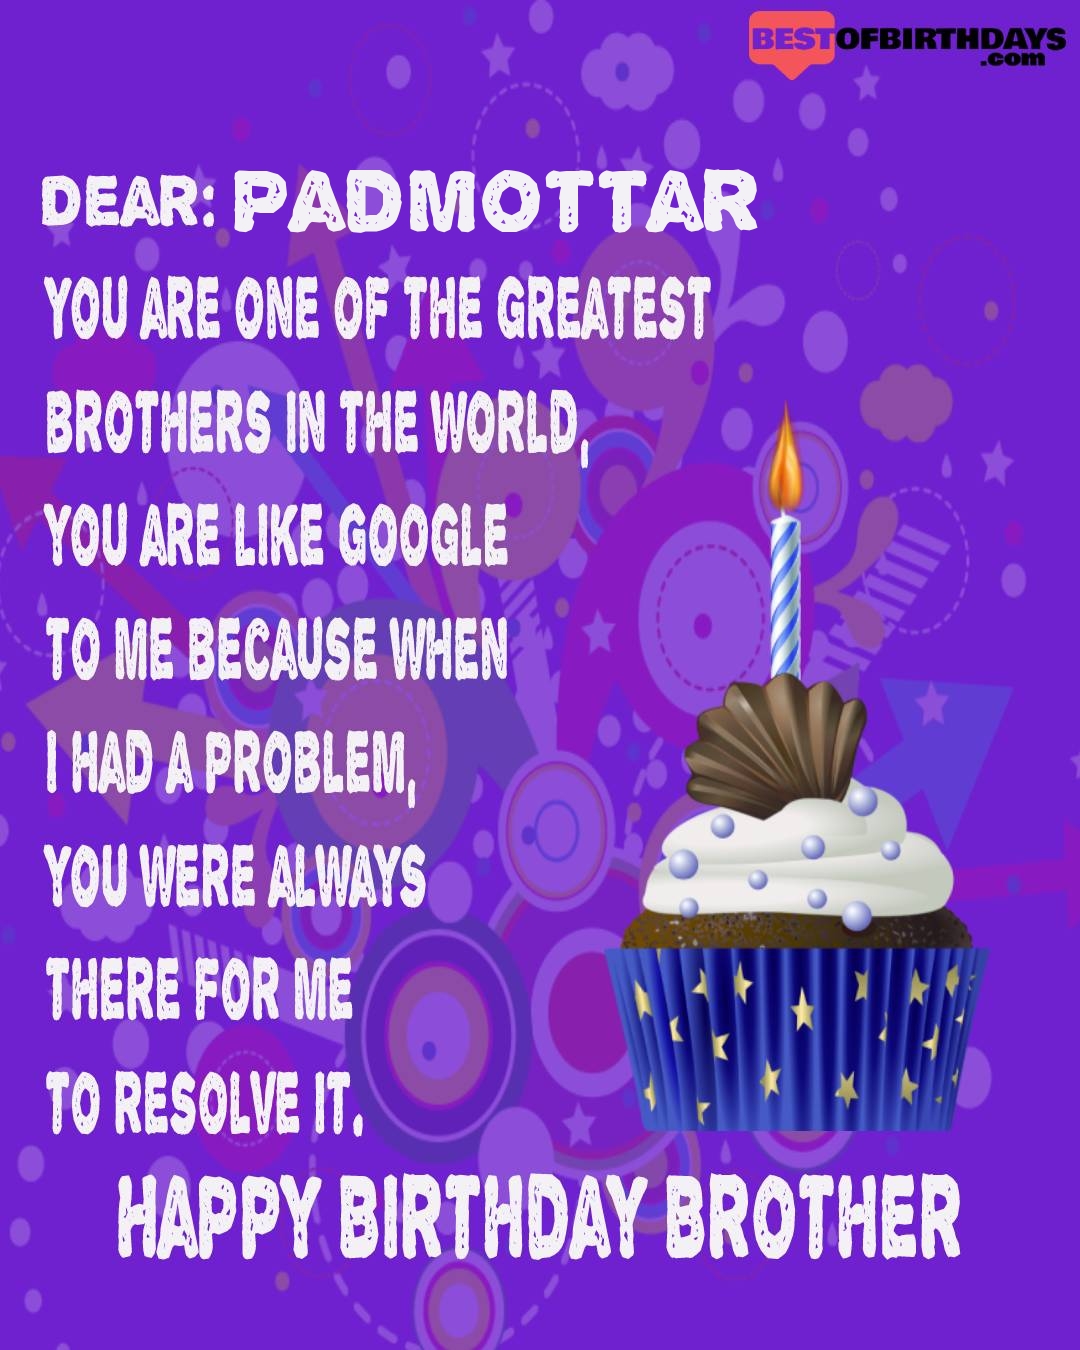 Happy birthday padmottar bhai brother bro